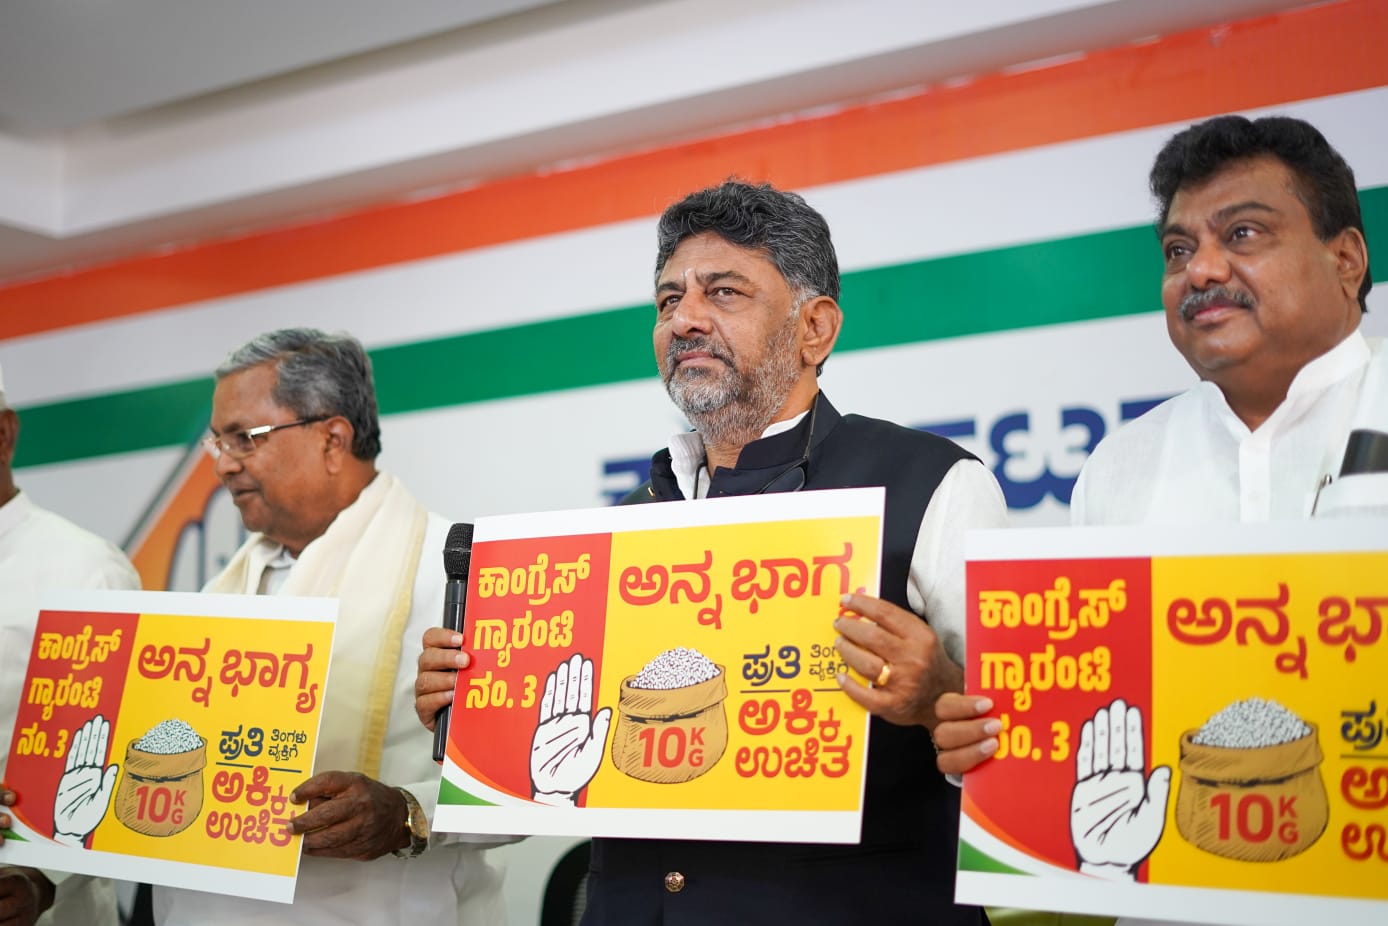 Karnataka Congress revives ‘Anna Bhagya’ as poll guarantee: 10 kg free rice for BPL families